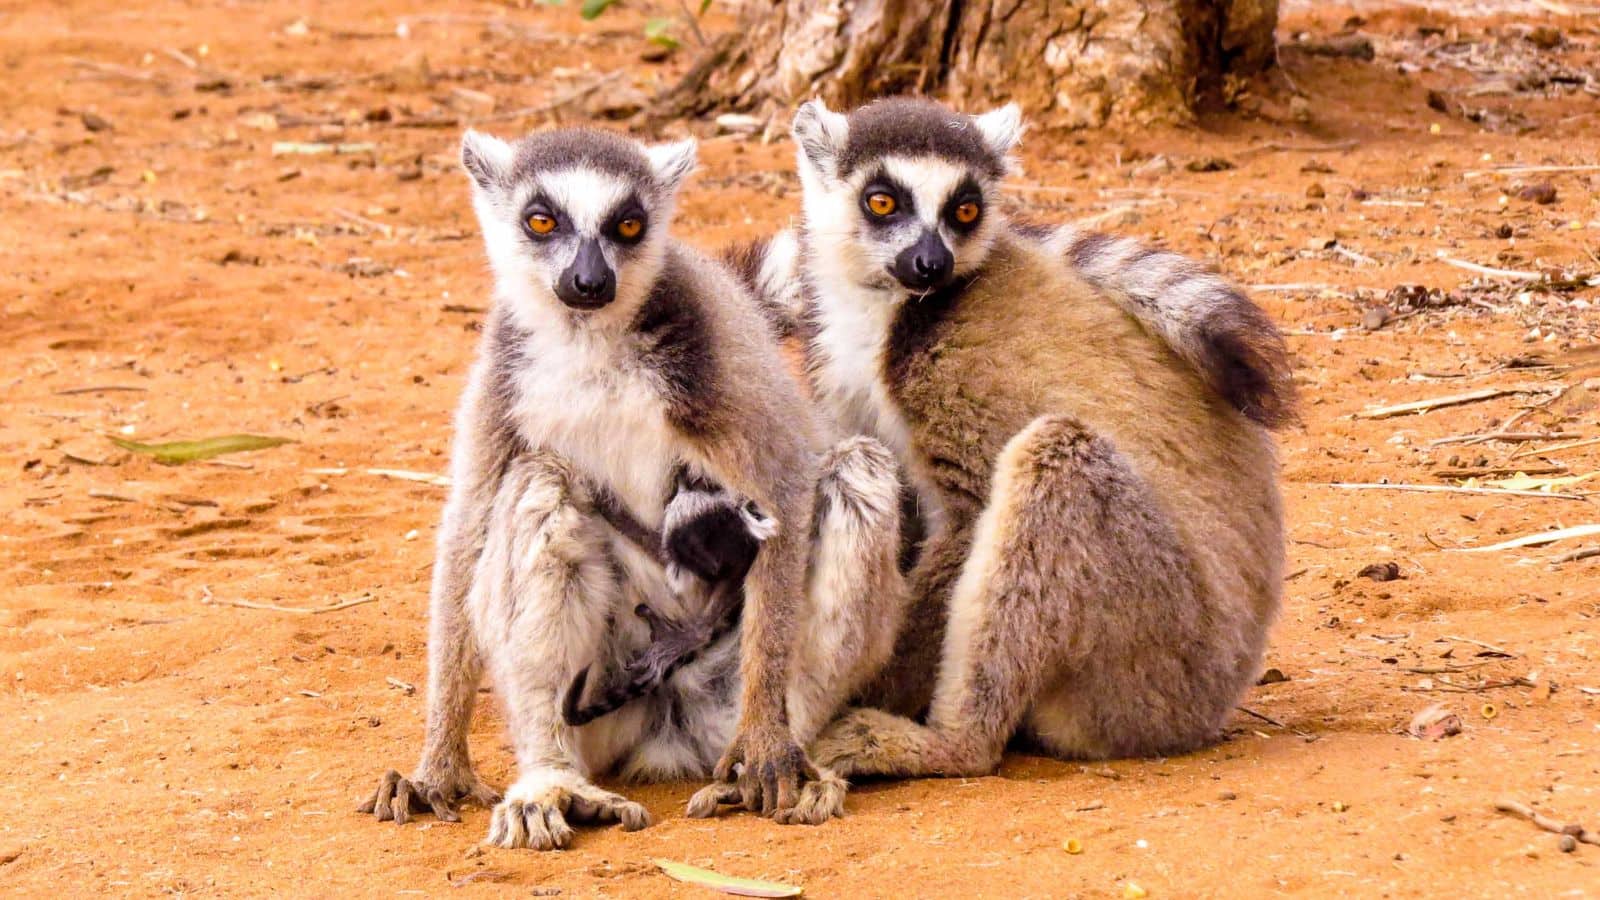 Go to Madagascar for an enchanting family adventure: A guide